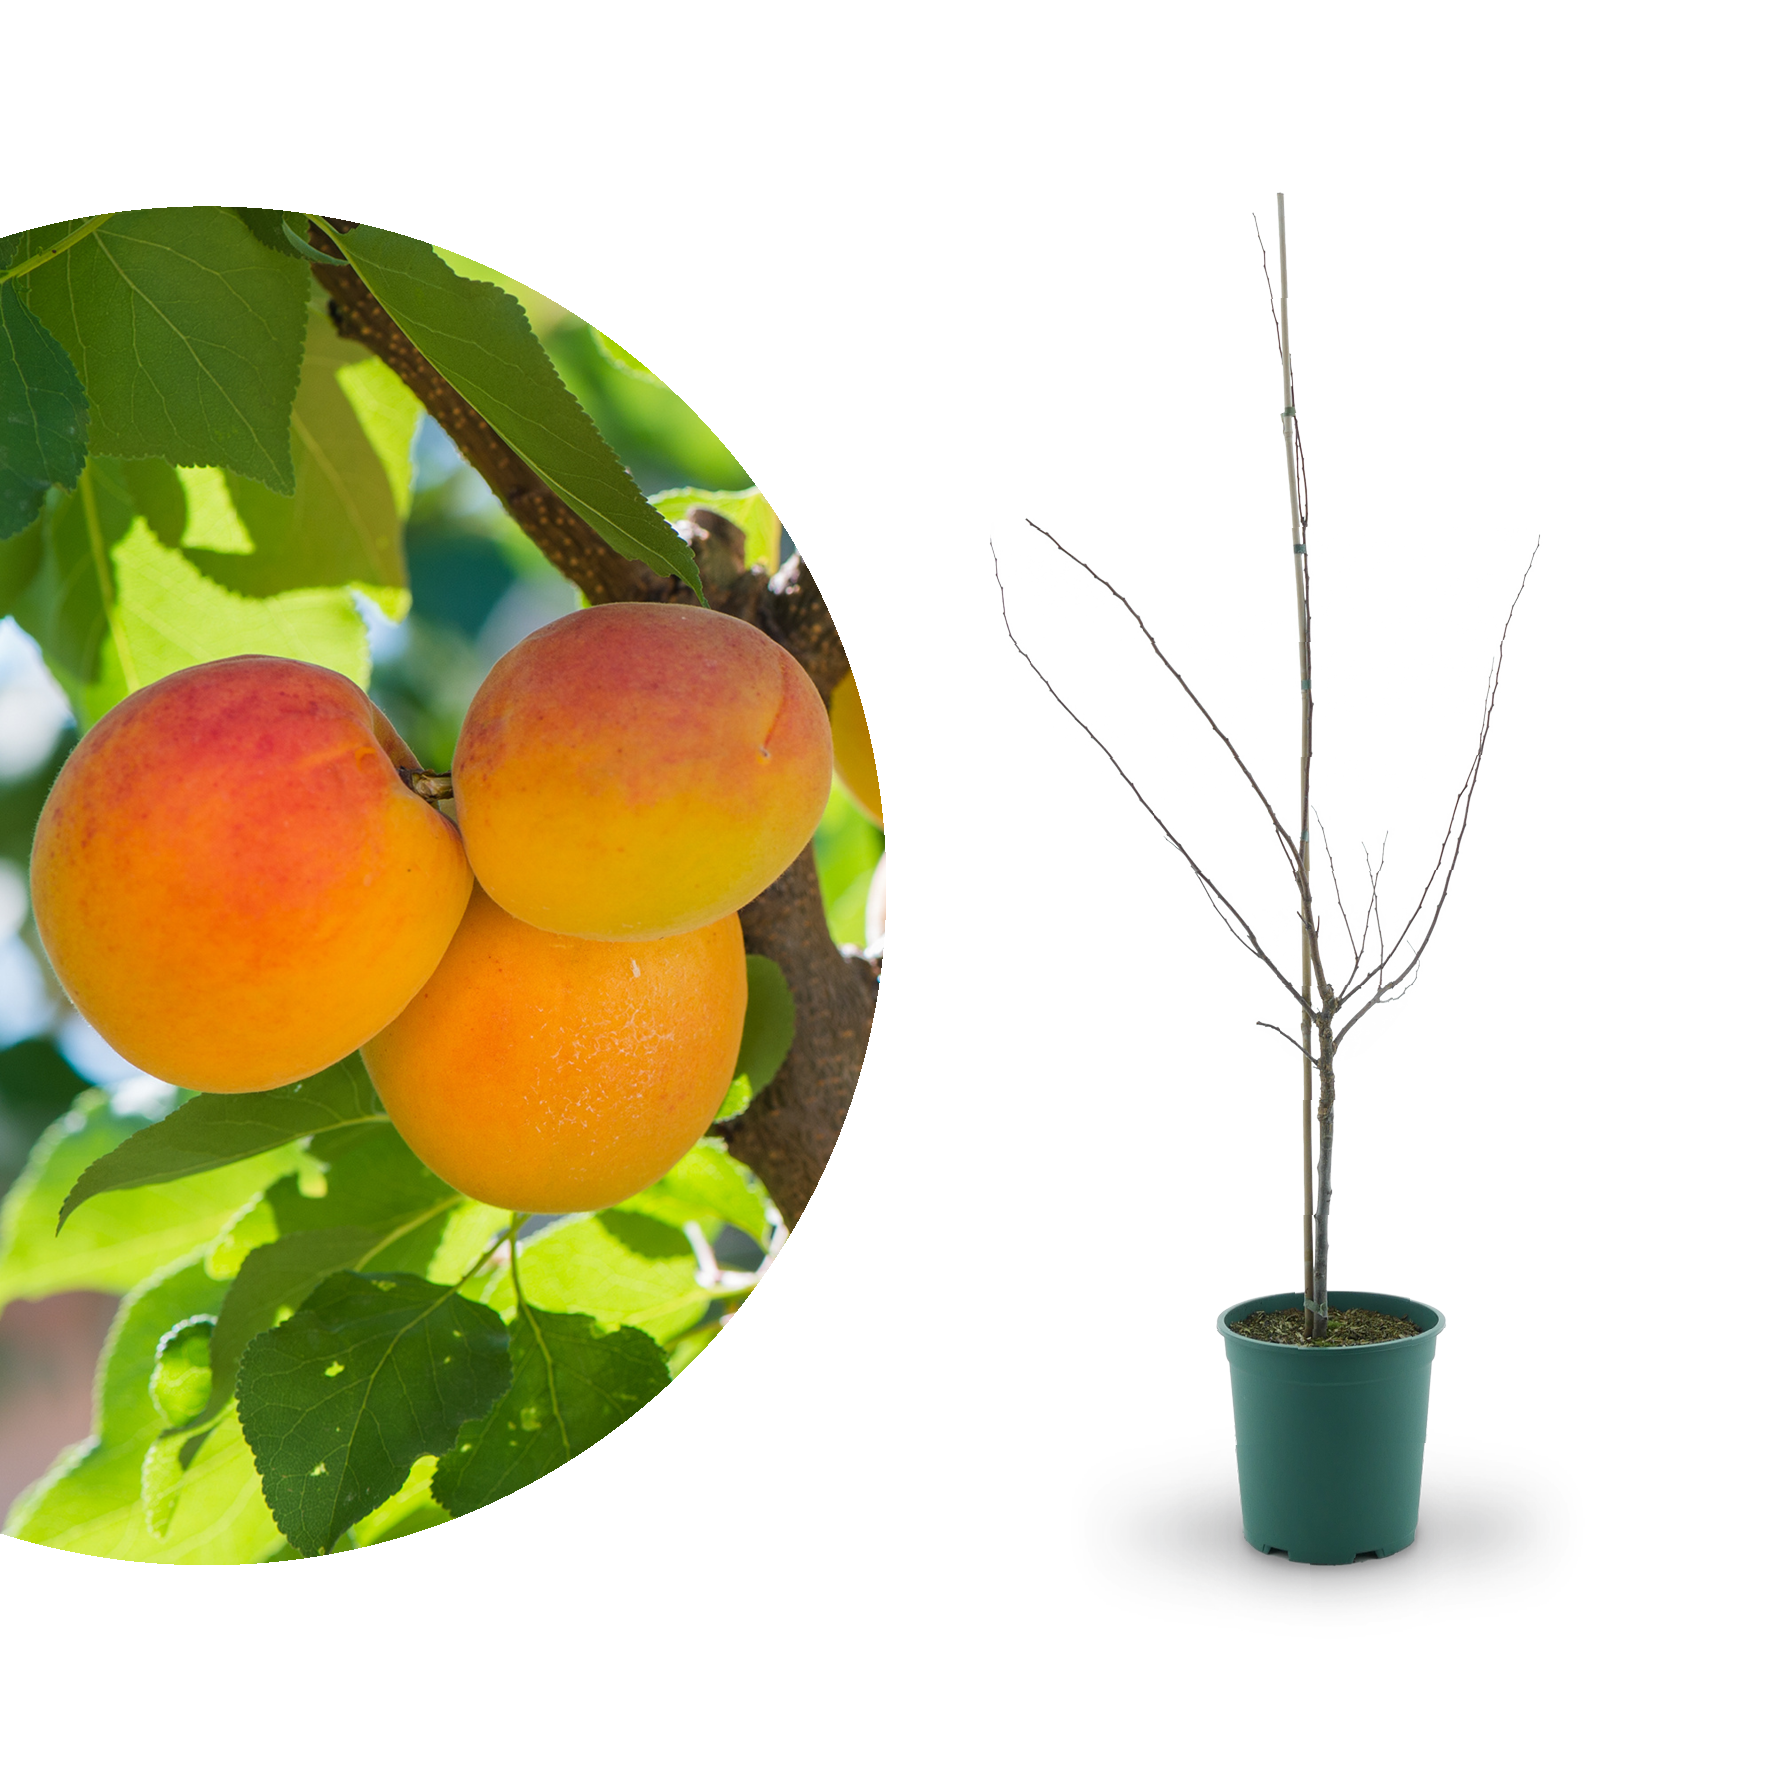 Bio-Aprikosenbaum 'Mino'